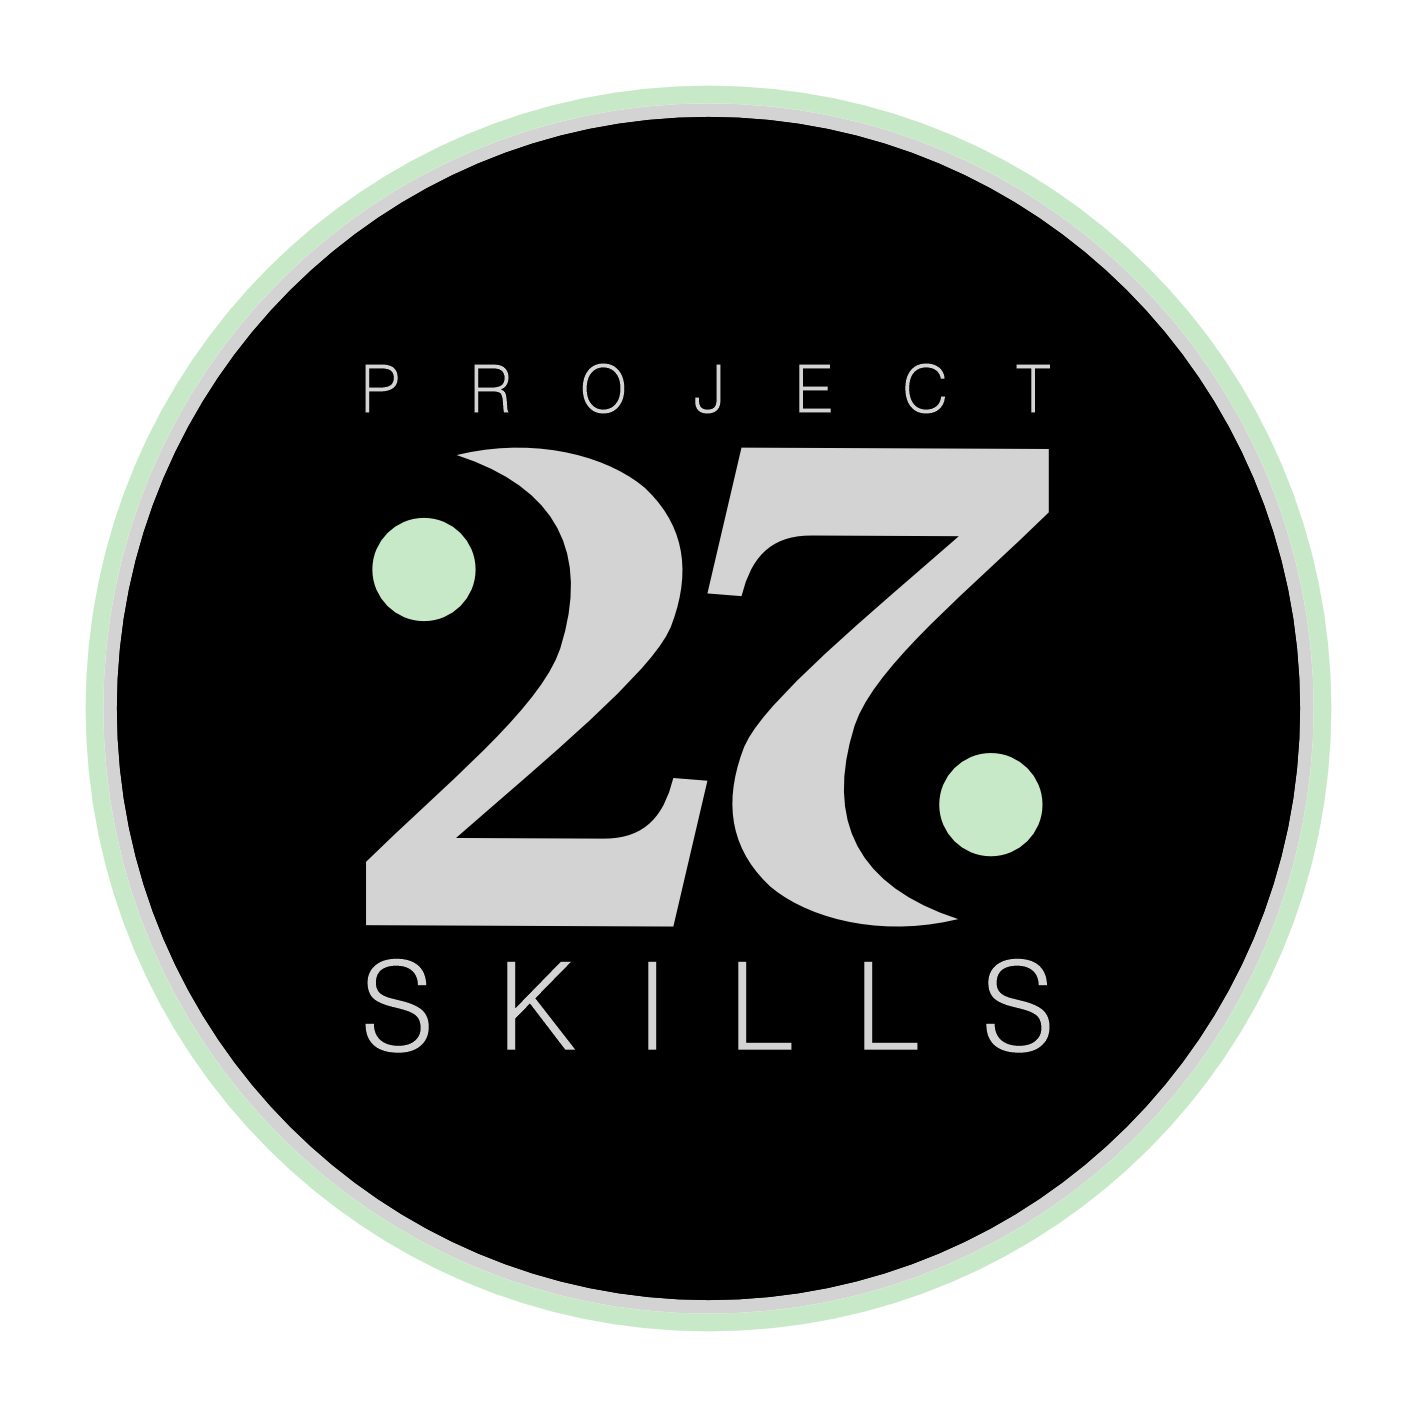 Project 27 logo